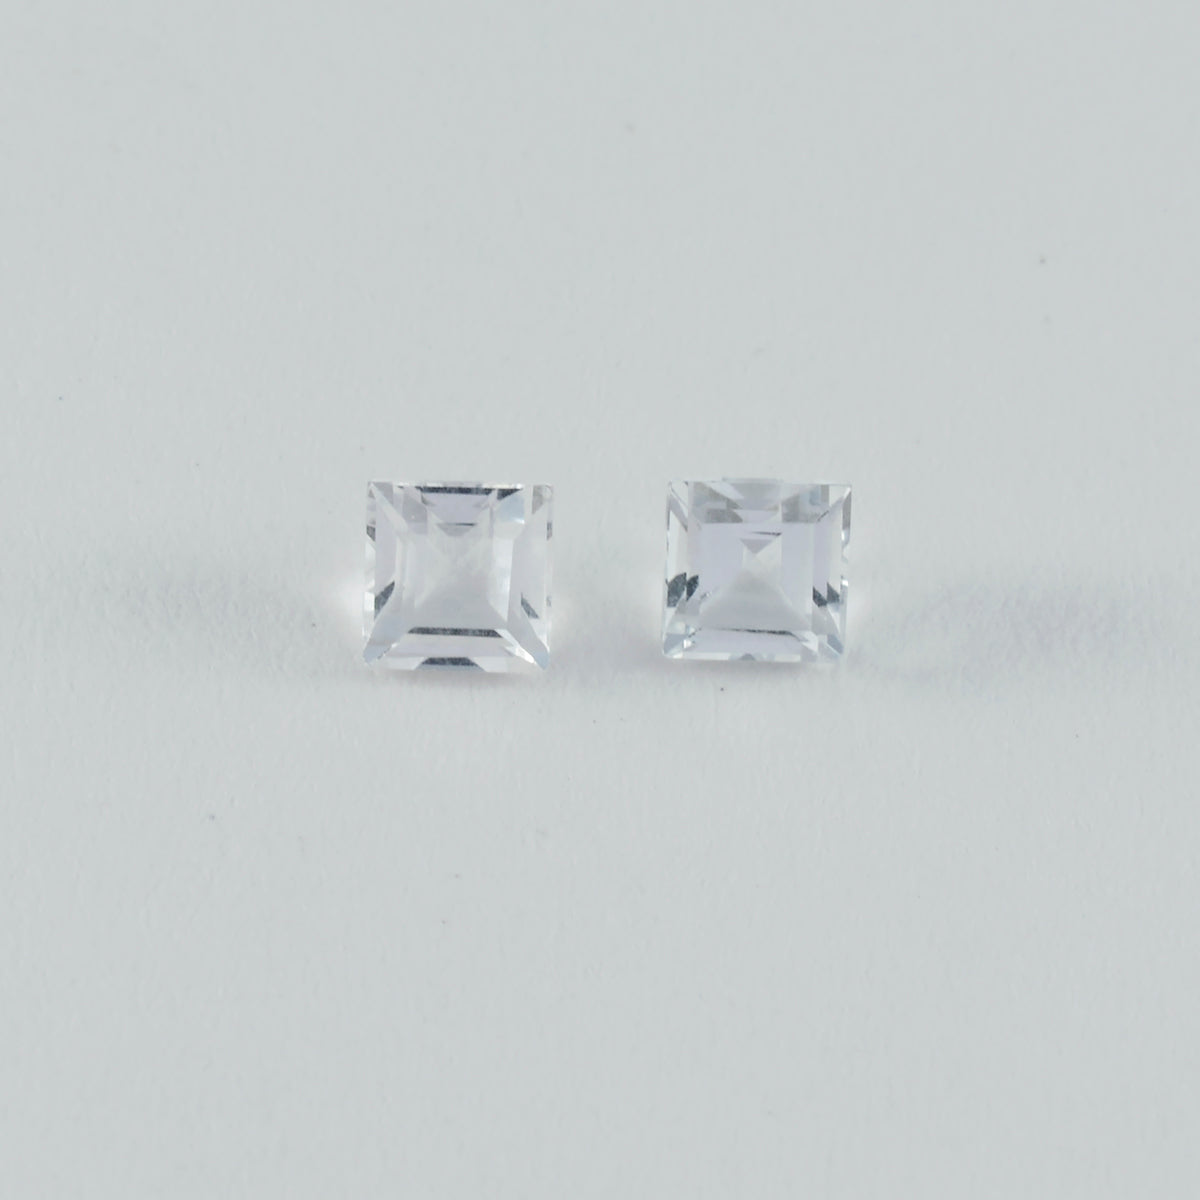 riyogems 1 st vit kristall kvarts facetterad 6x6 mm fyrkantig form stilig kvalitet lös sten